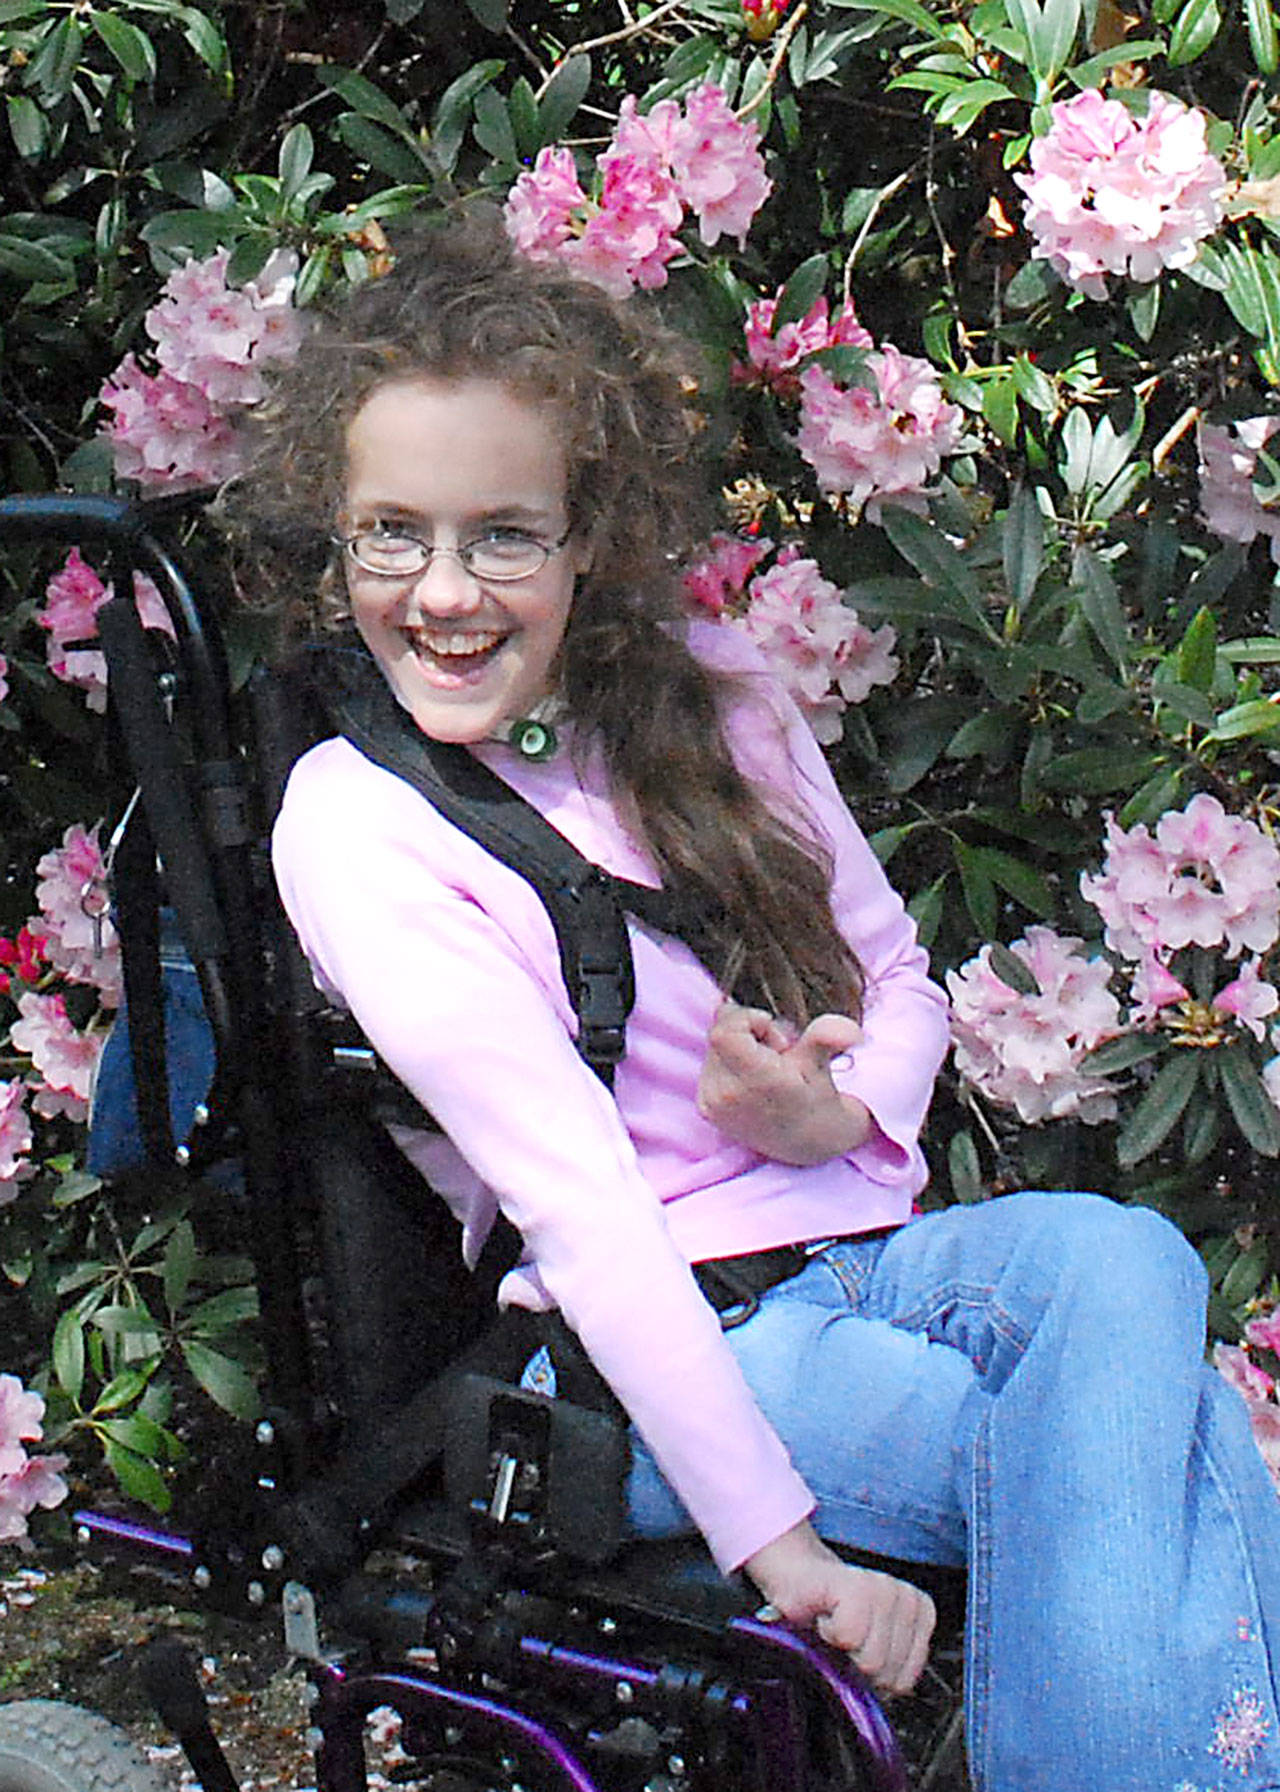 Quinn Redlin Kintner gives a thumbs up in her manual wheelchair. (Kelsey Redlin)